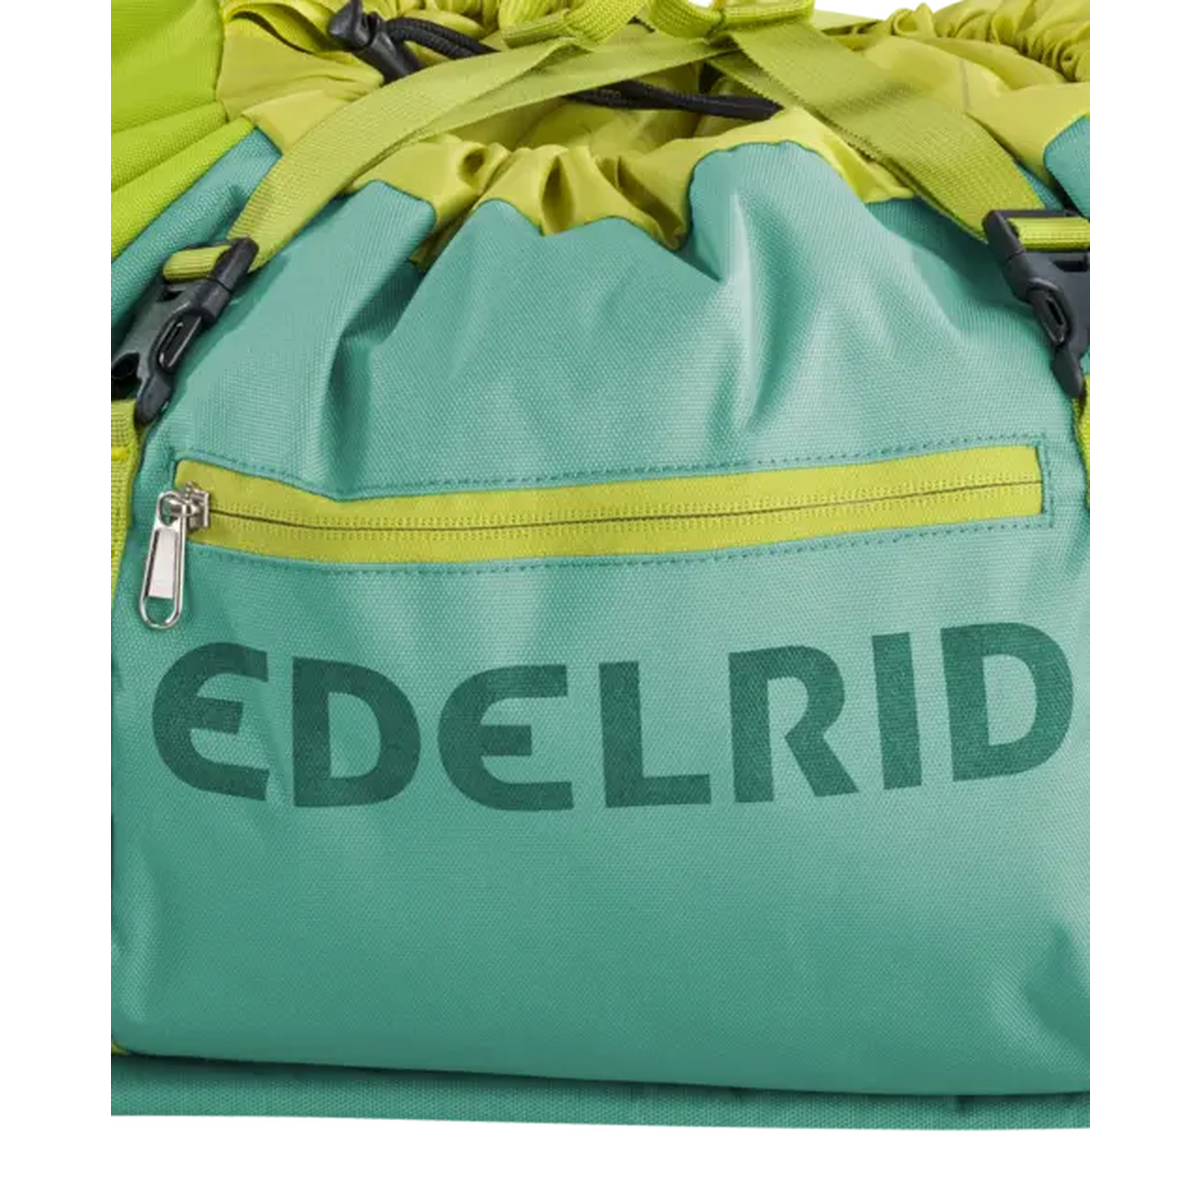 Edelrid Drone Climbing Rope Bag - Jade Green